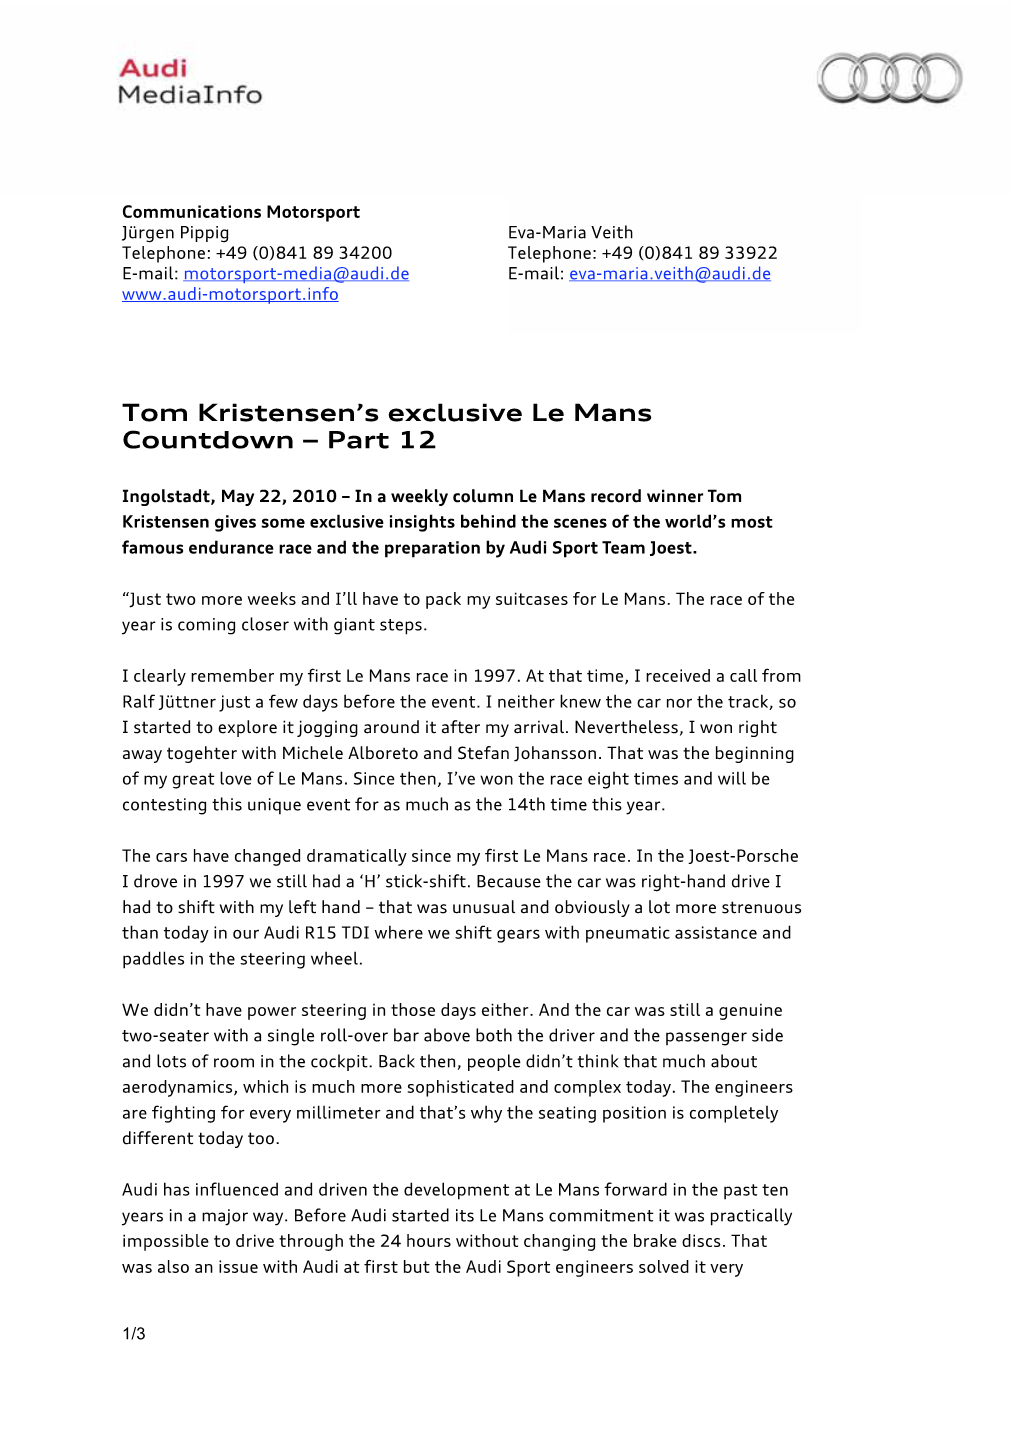 Tom Kristensen's Exclusive Le Mans Countdown